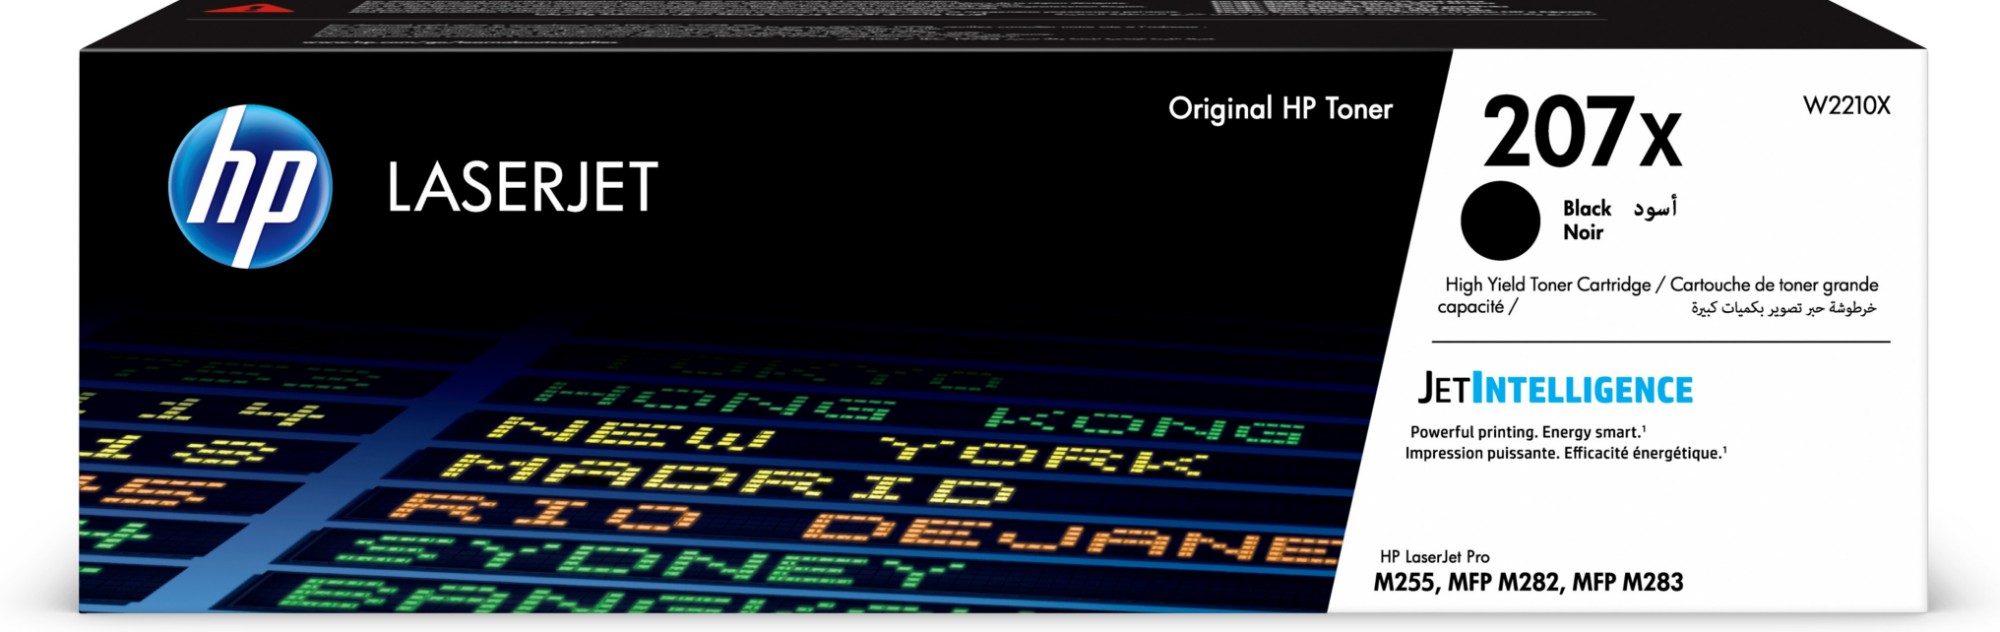 HP Original 207X Black High Capacity Toner Cartridge W2210X